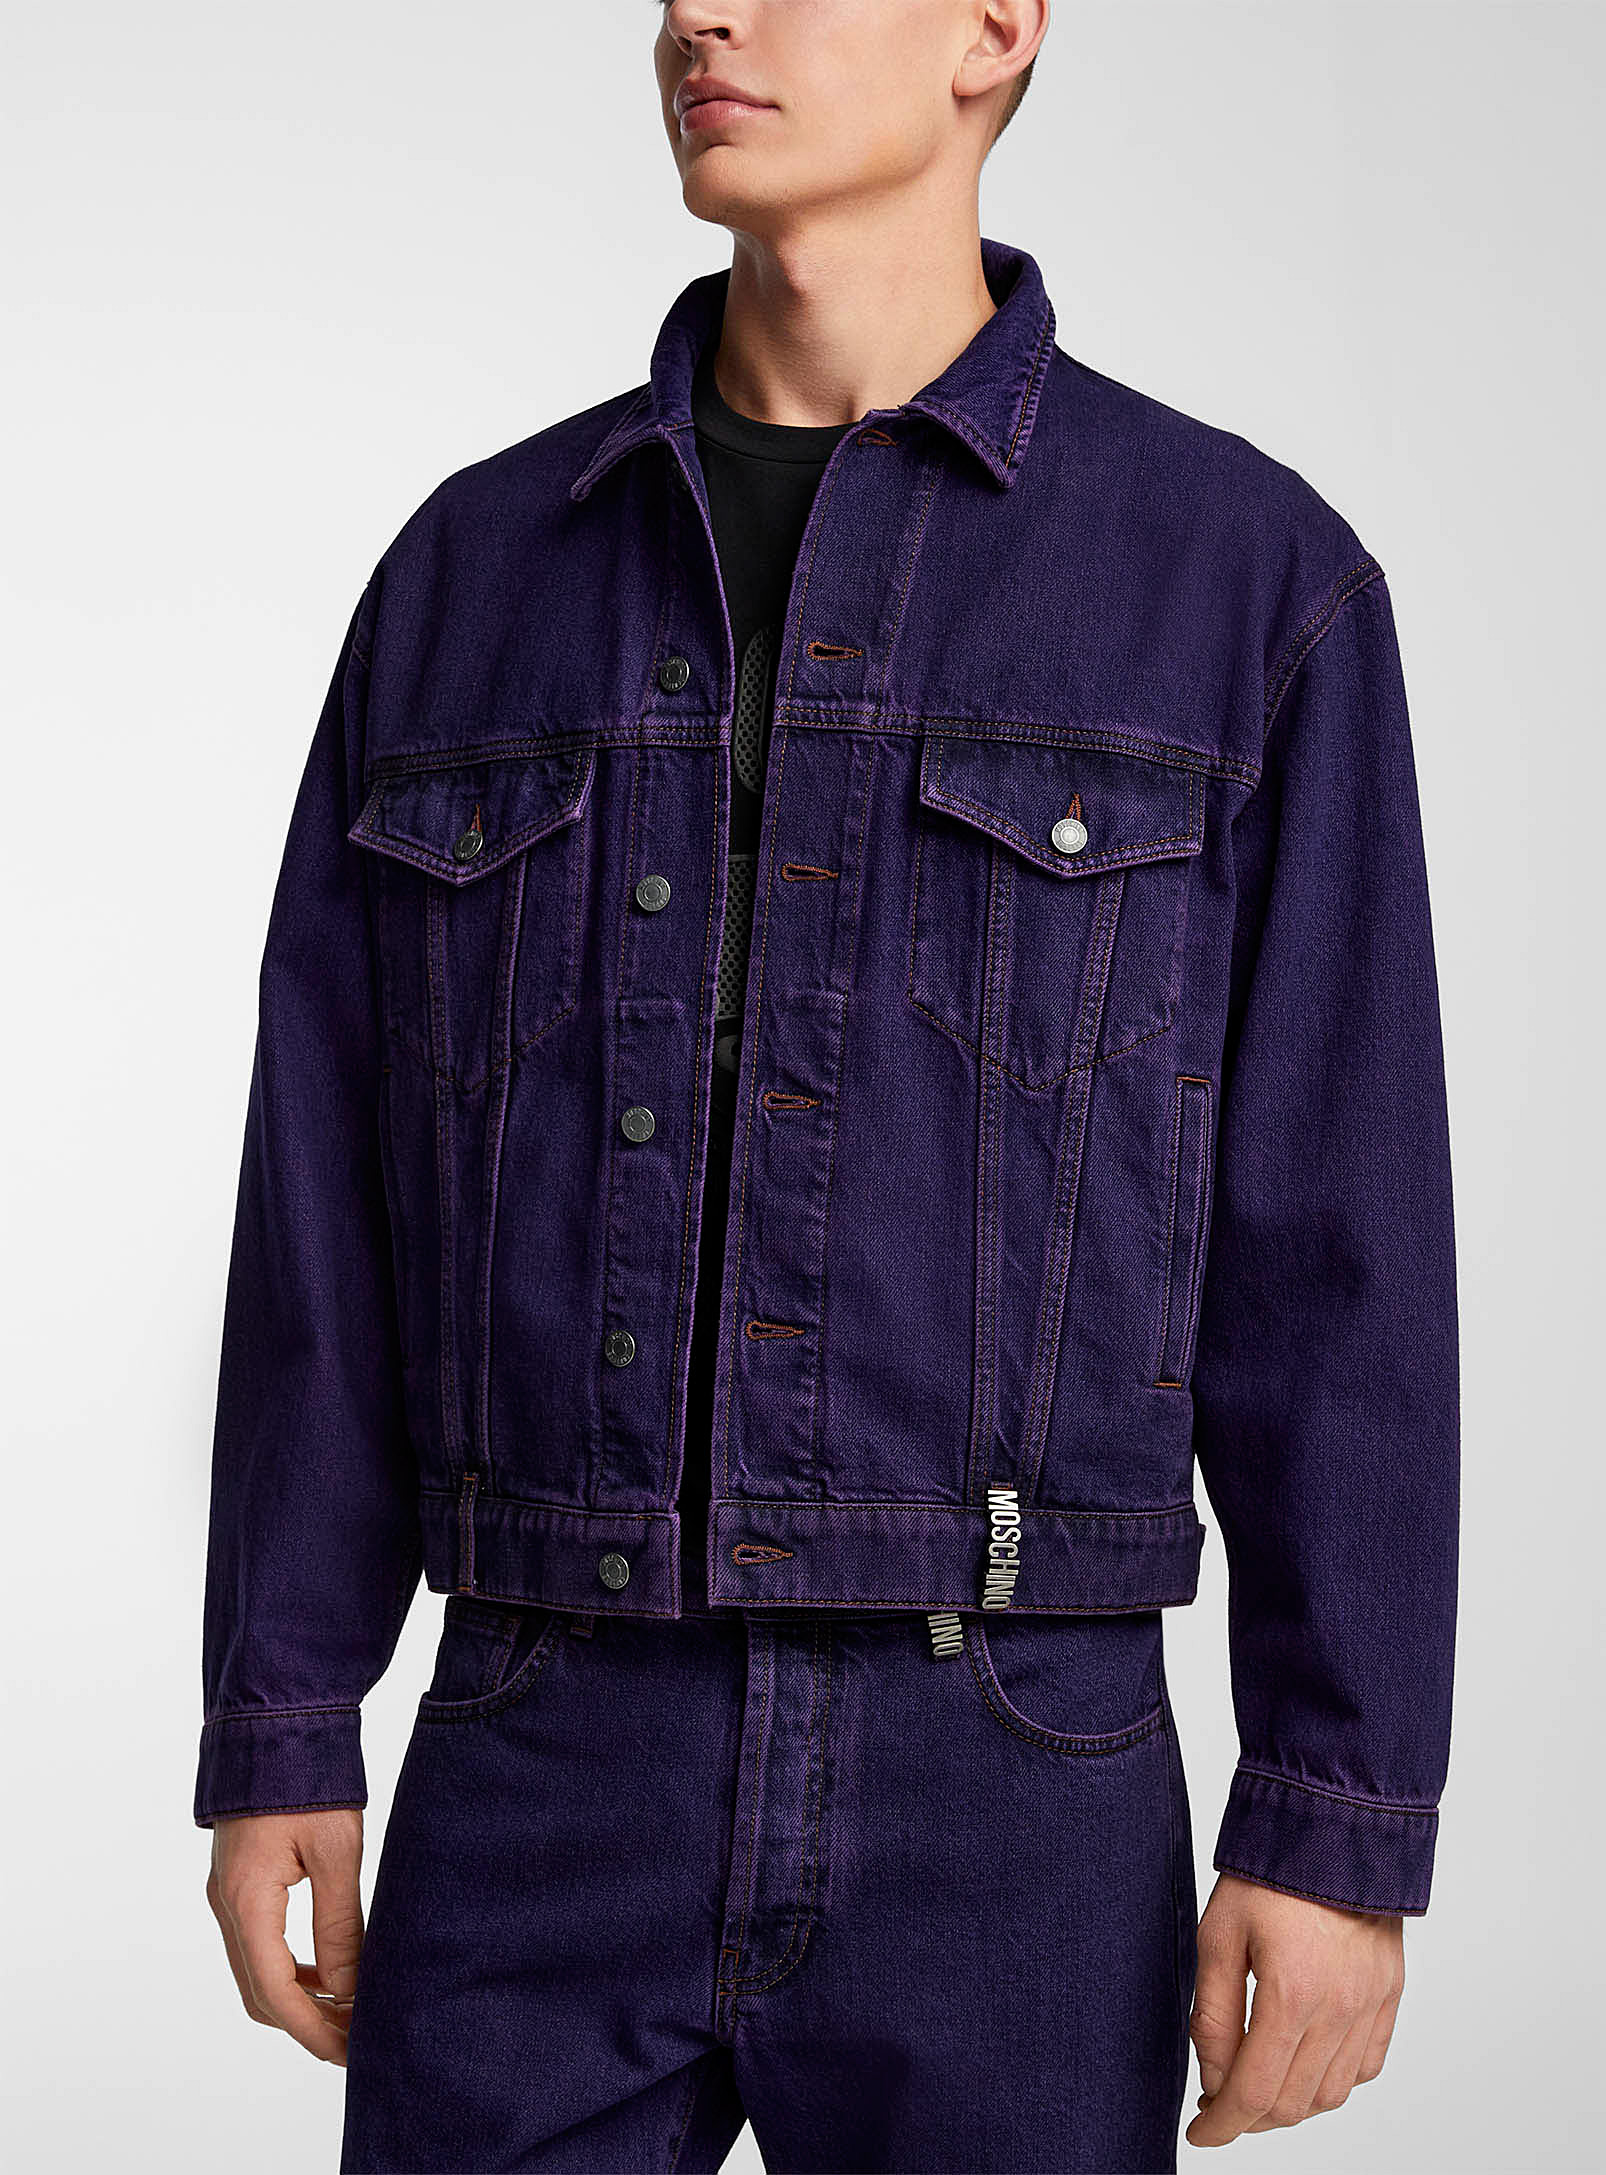 Moschino - Men's Signature strap purple denim jacket